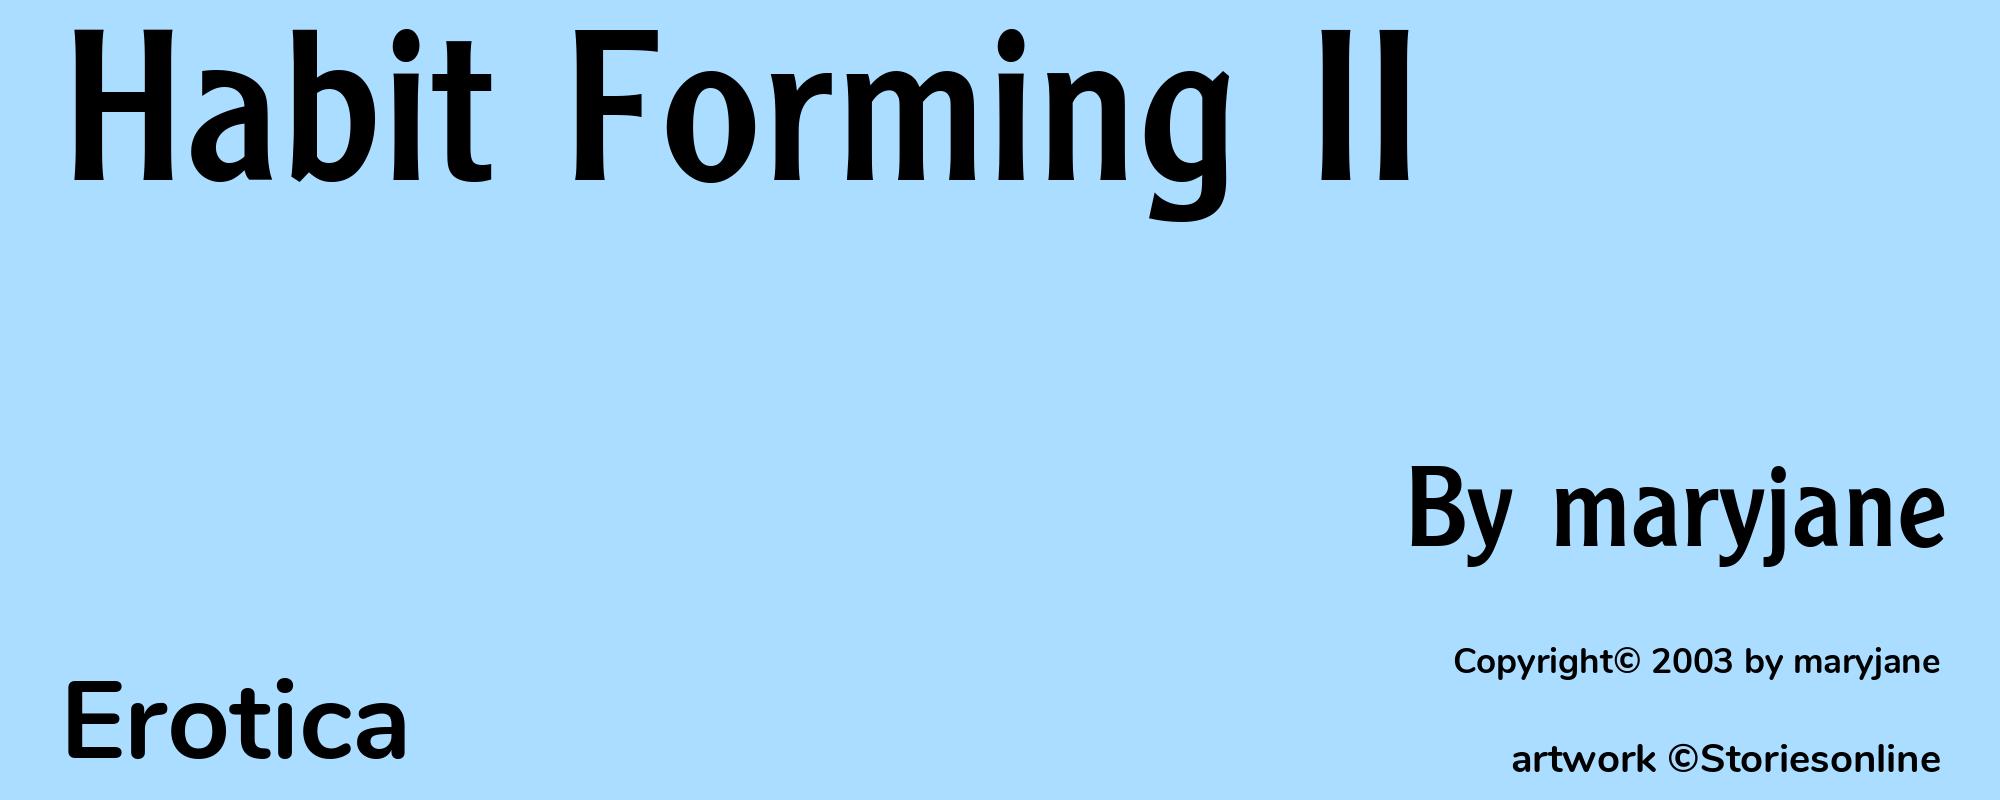 Habit Forming II - Cover